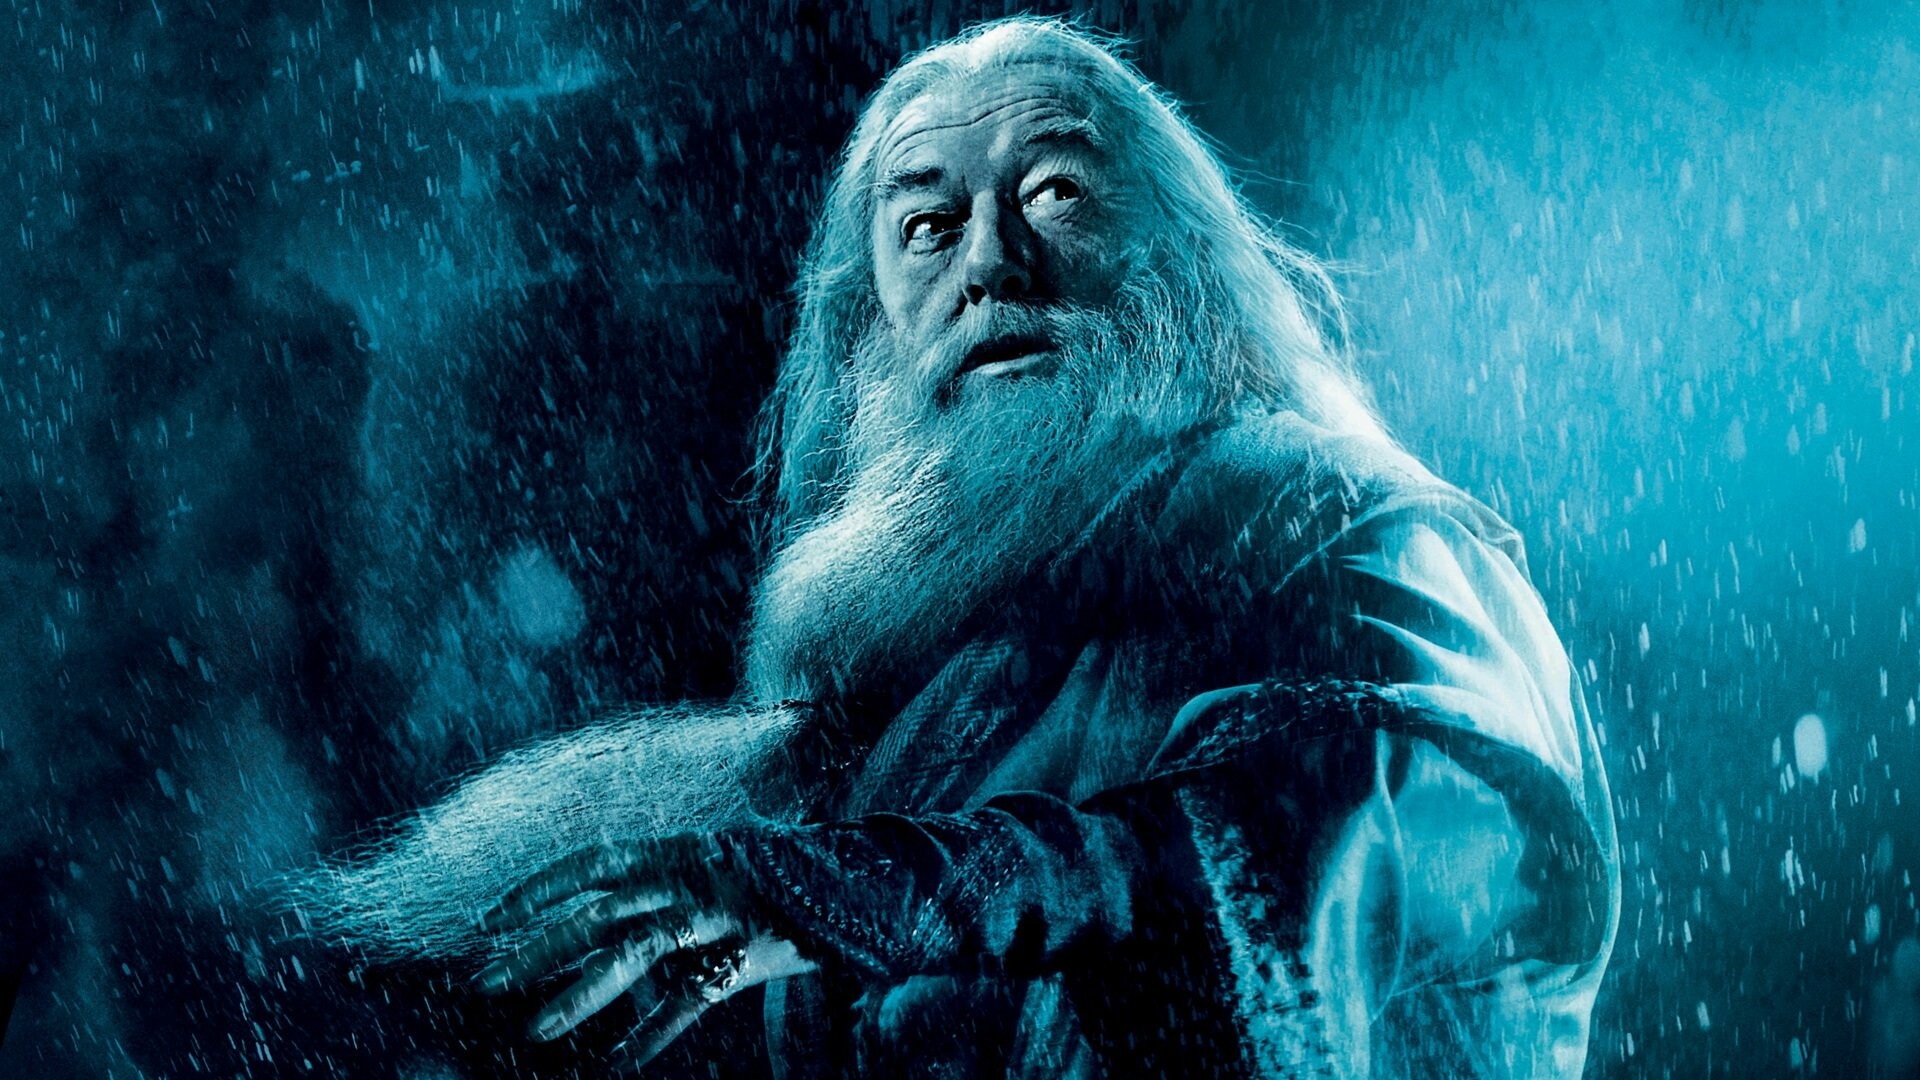 Harry Potter: Albus Dumbledore, The headmaster of the wizarding school Hogwarts. 1920x1080 Full HD Wallpaper.